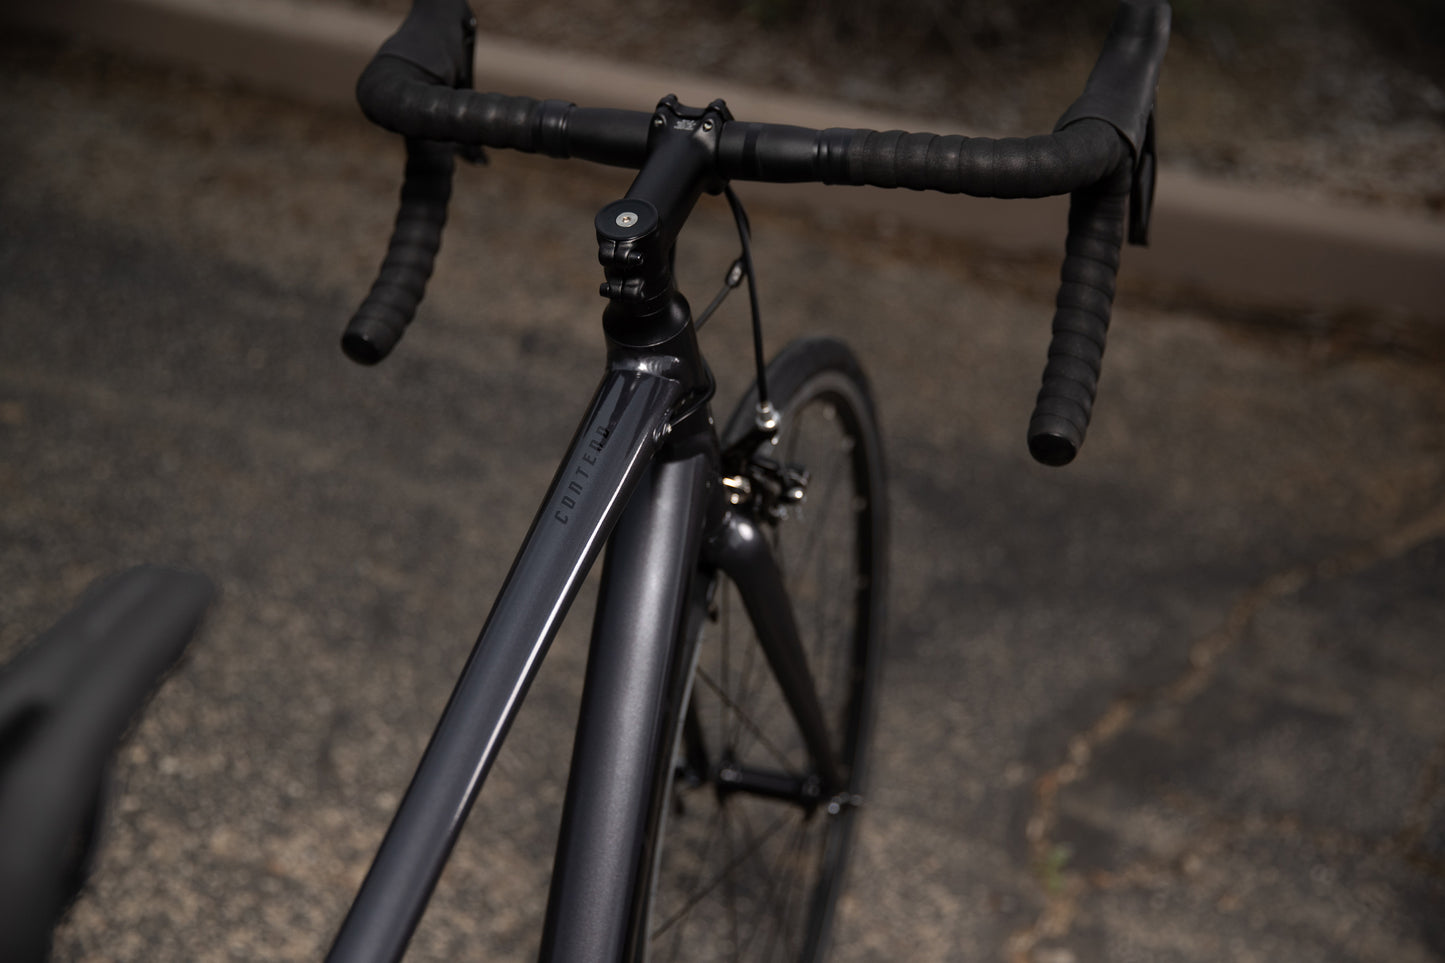 Bicicleta Giant Contend 3 (2 Colores: Negro y Gris Oscuro)